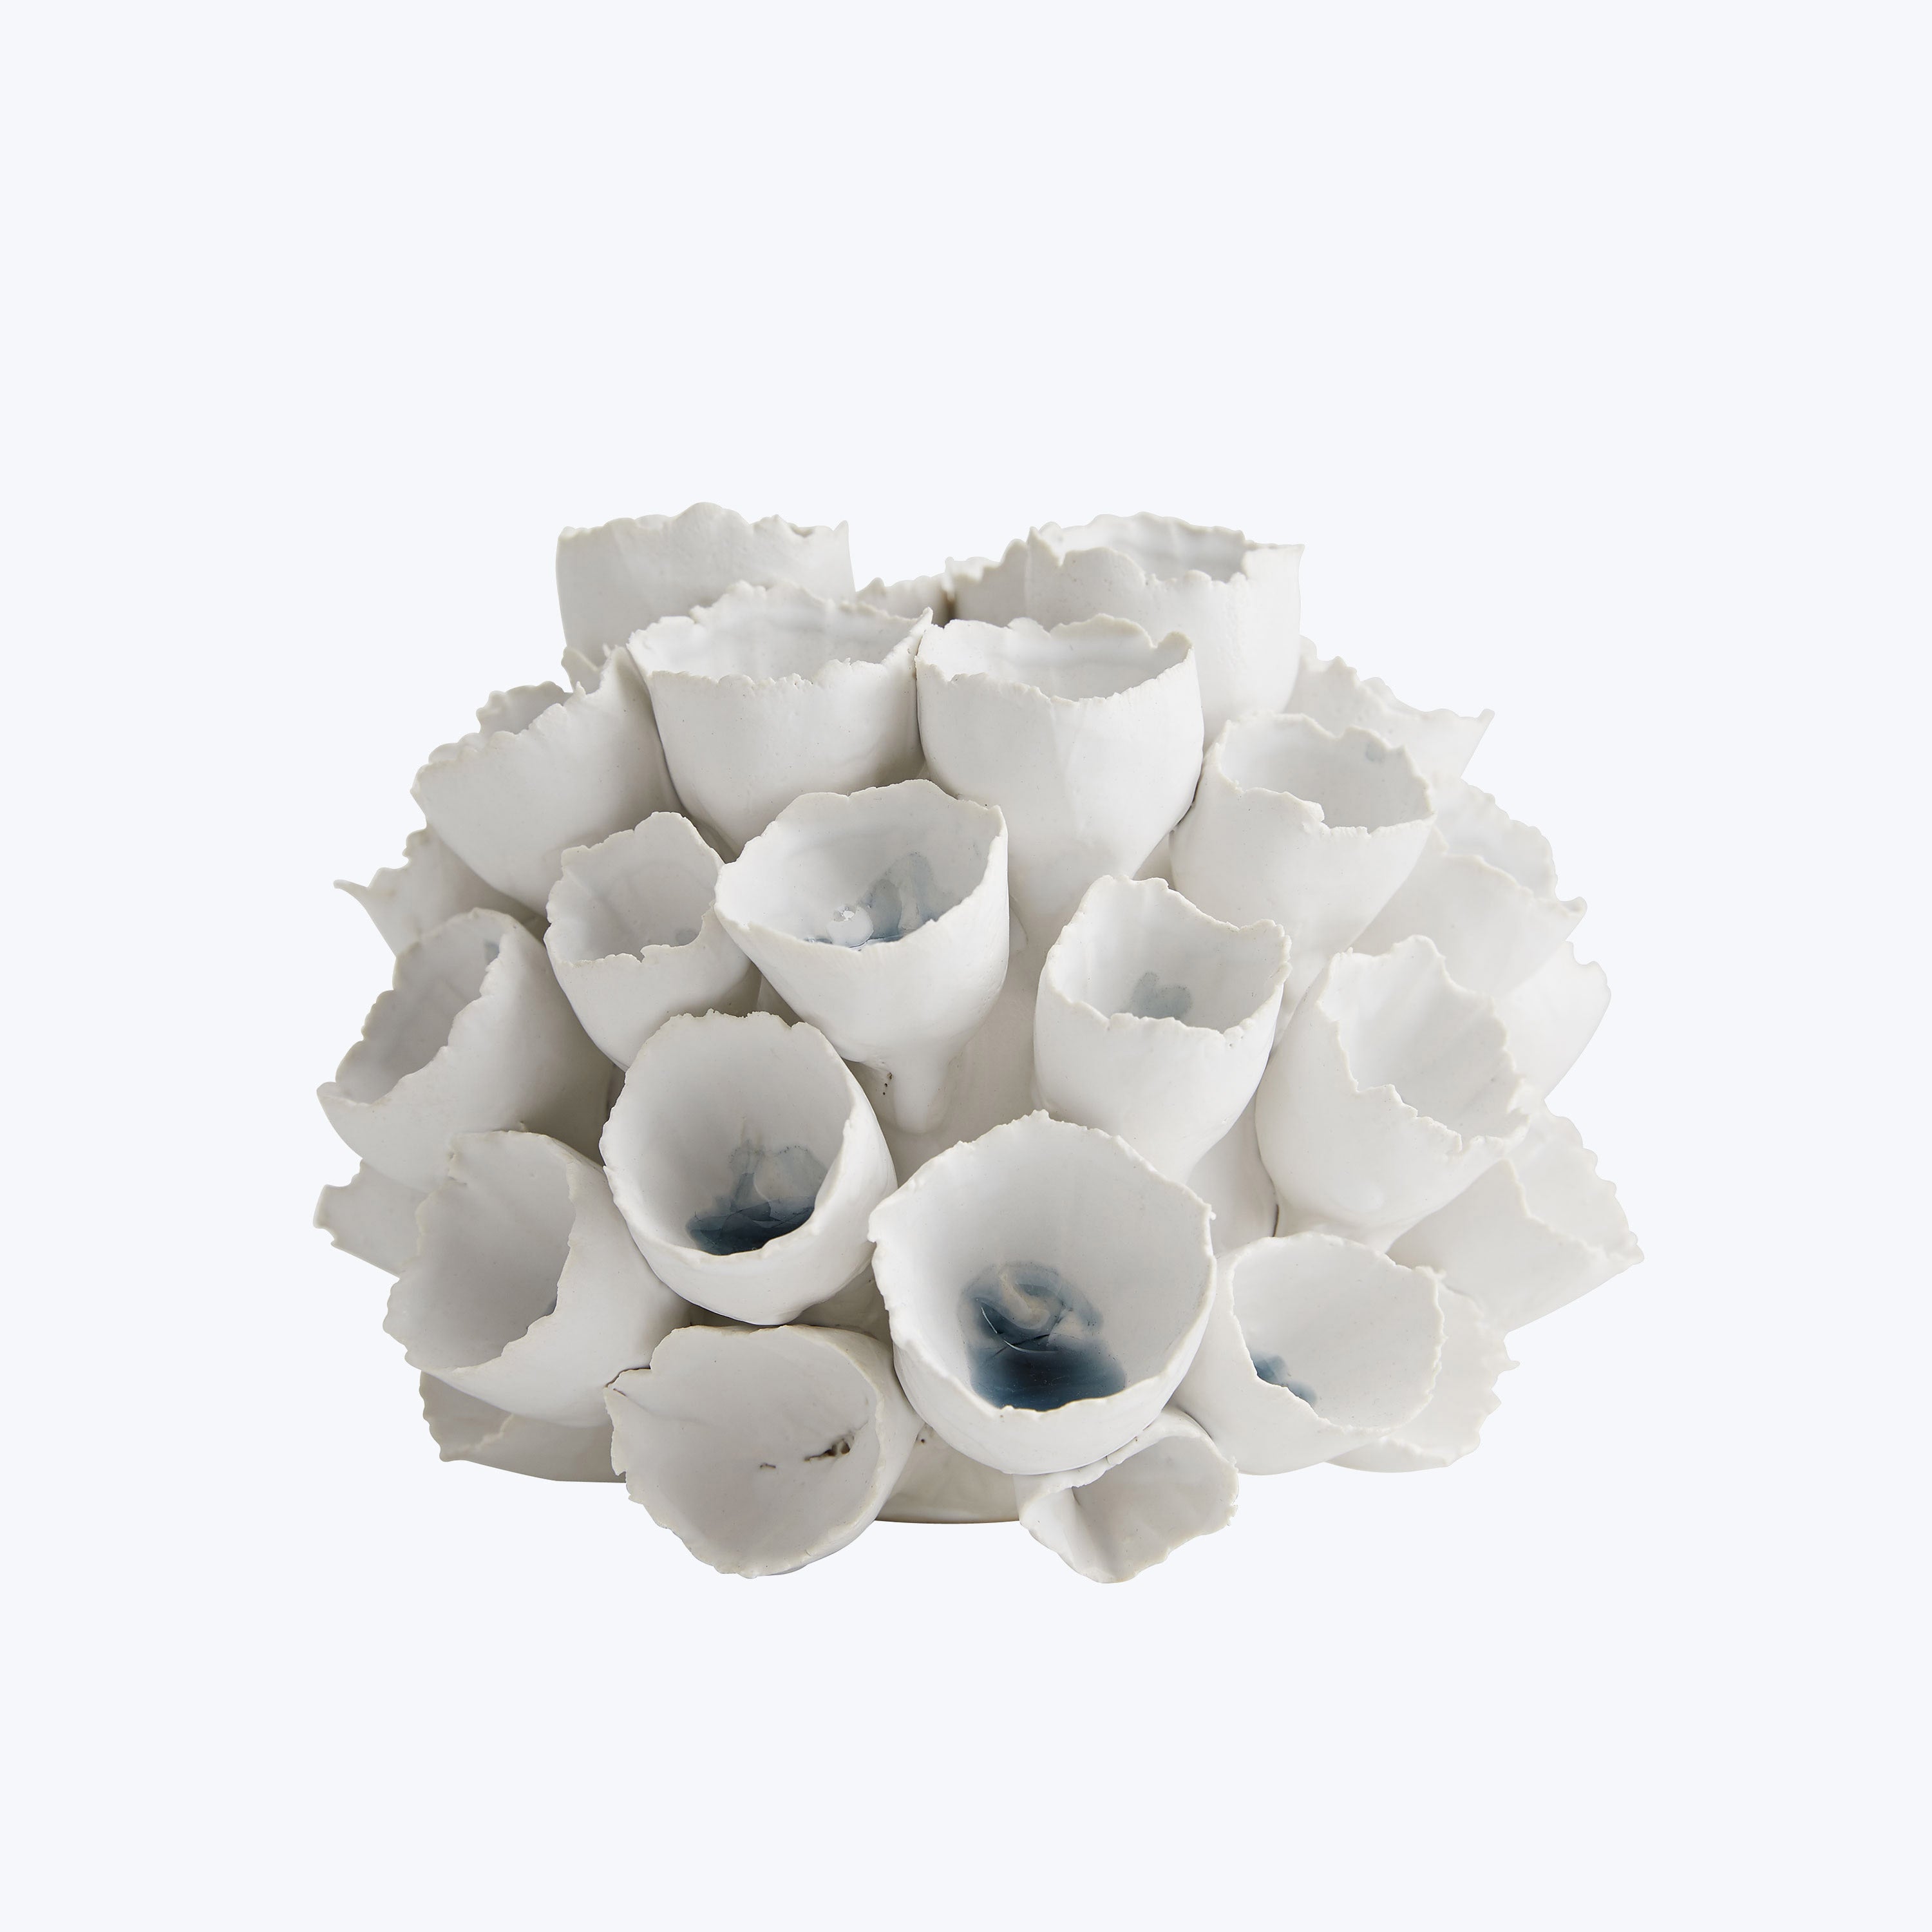 Delicate white flower-like ceramic objects, a serene and elegant decor.